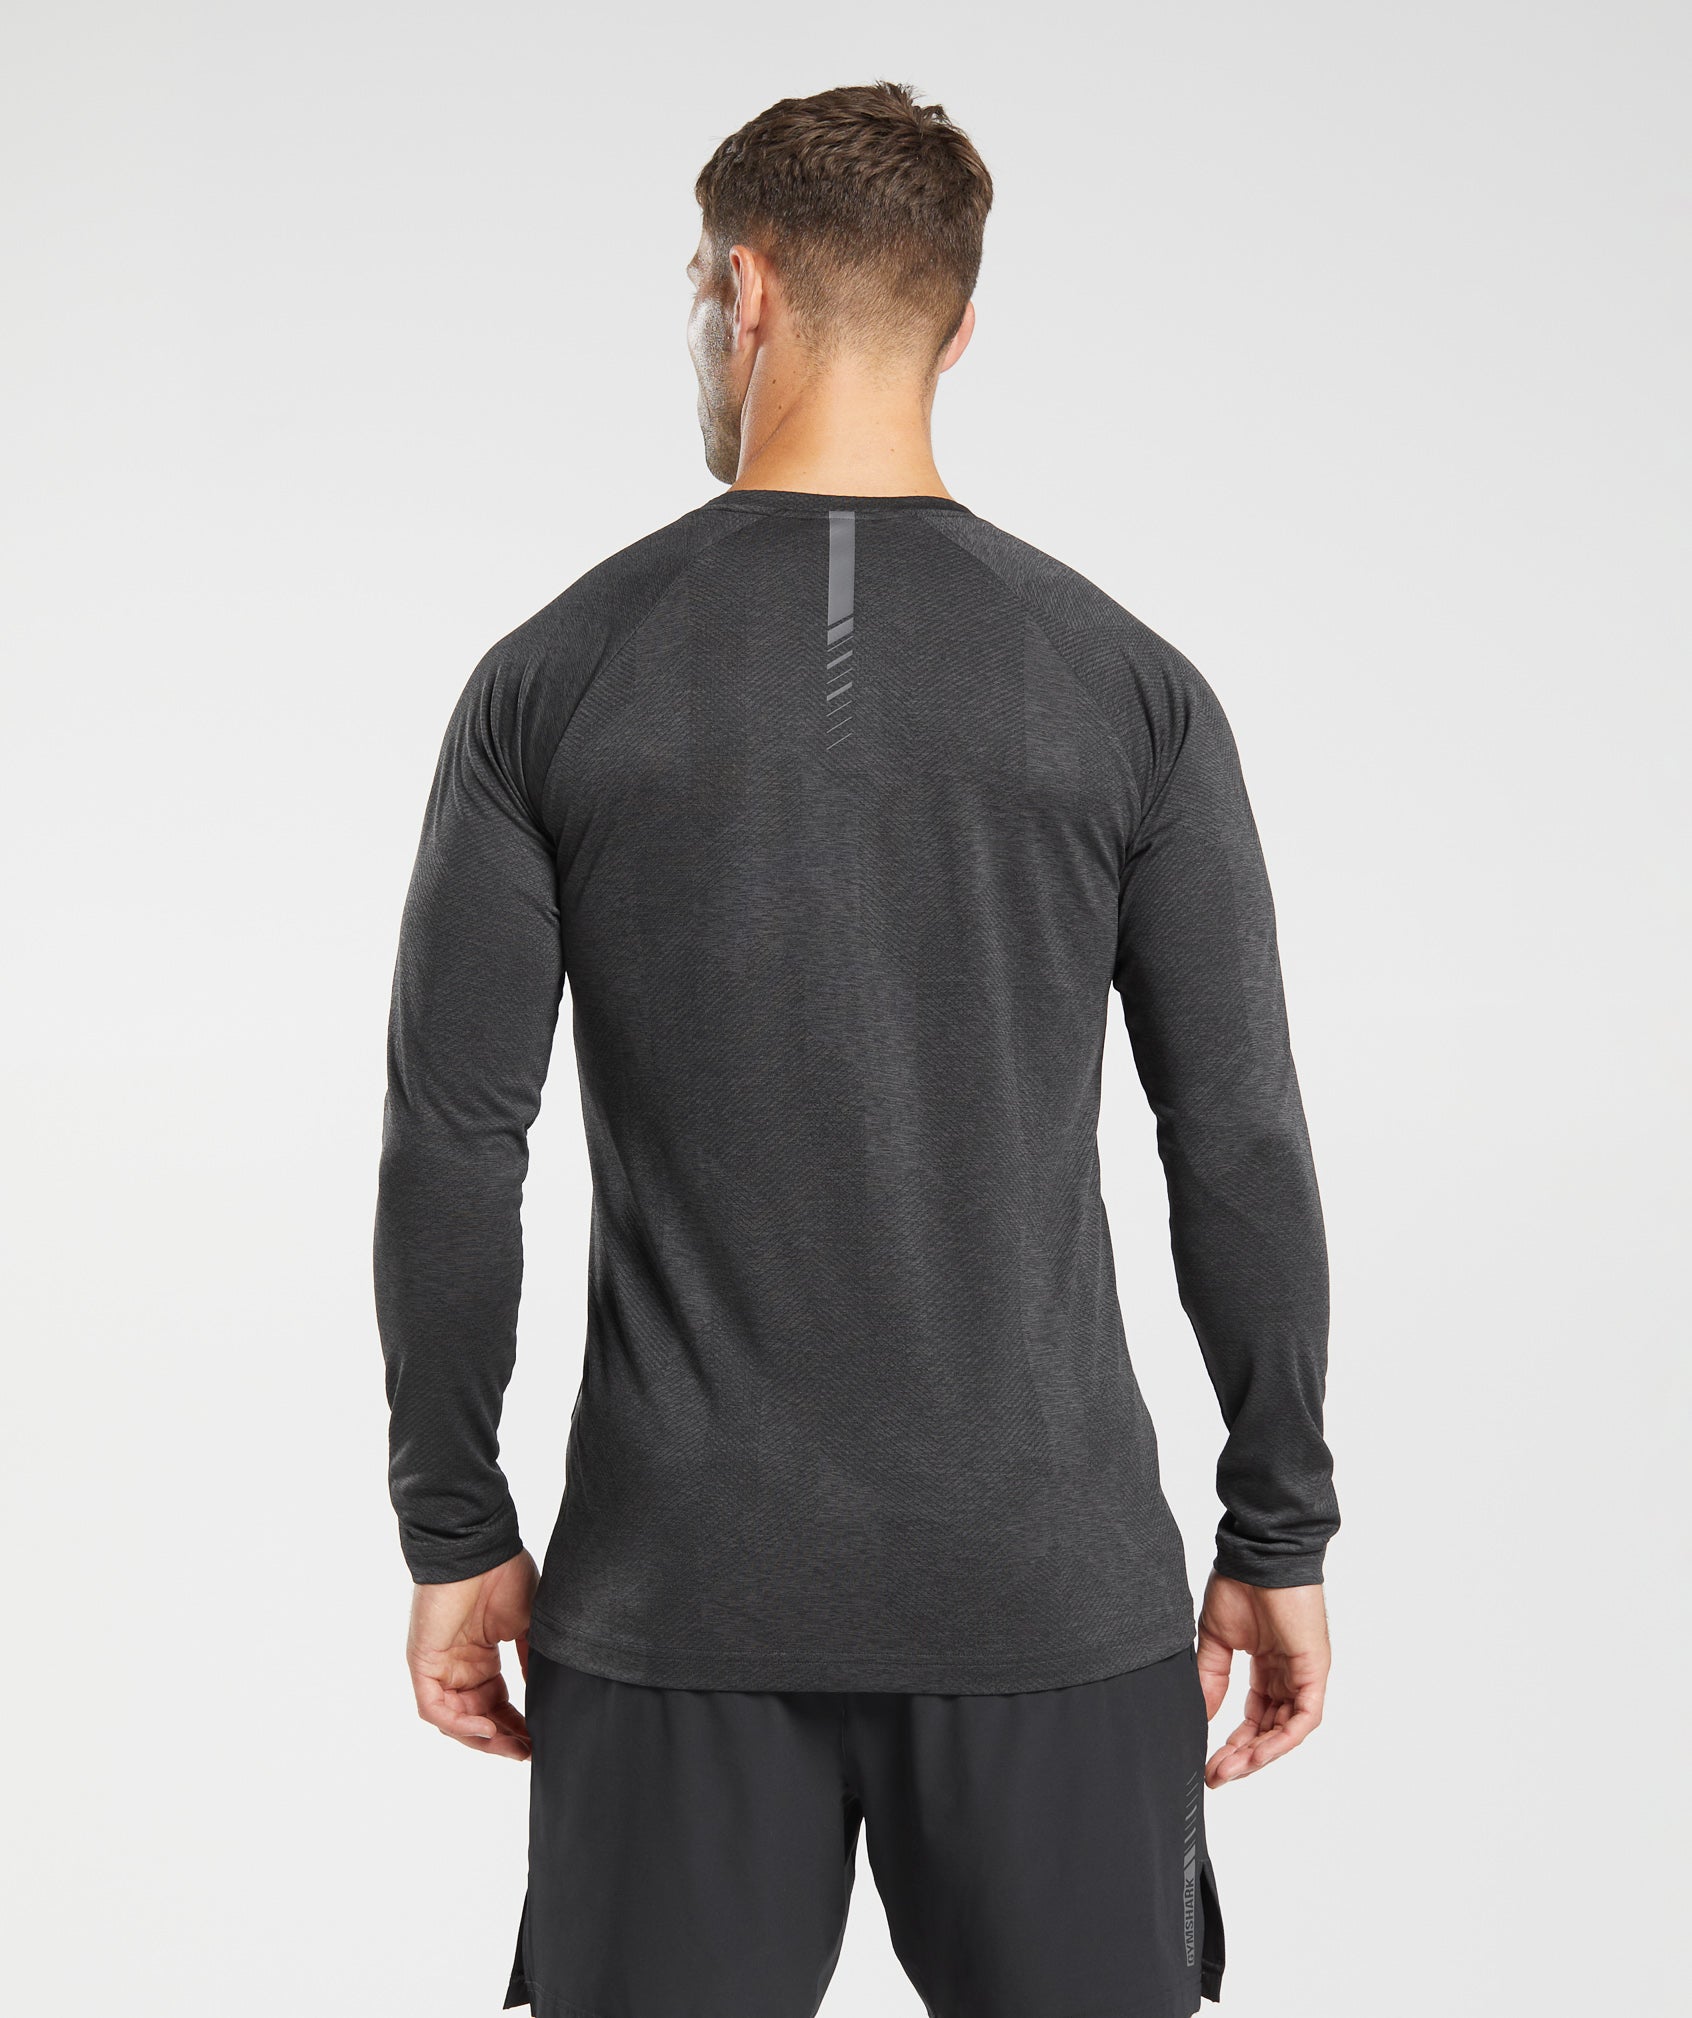 Apex Long Sleeve T-Shirt in Black/Onyx Grey - view 2